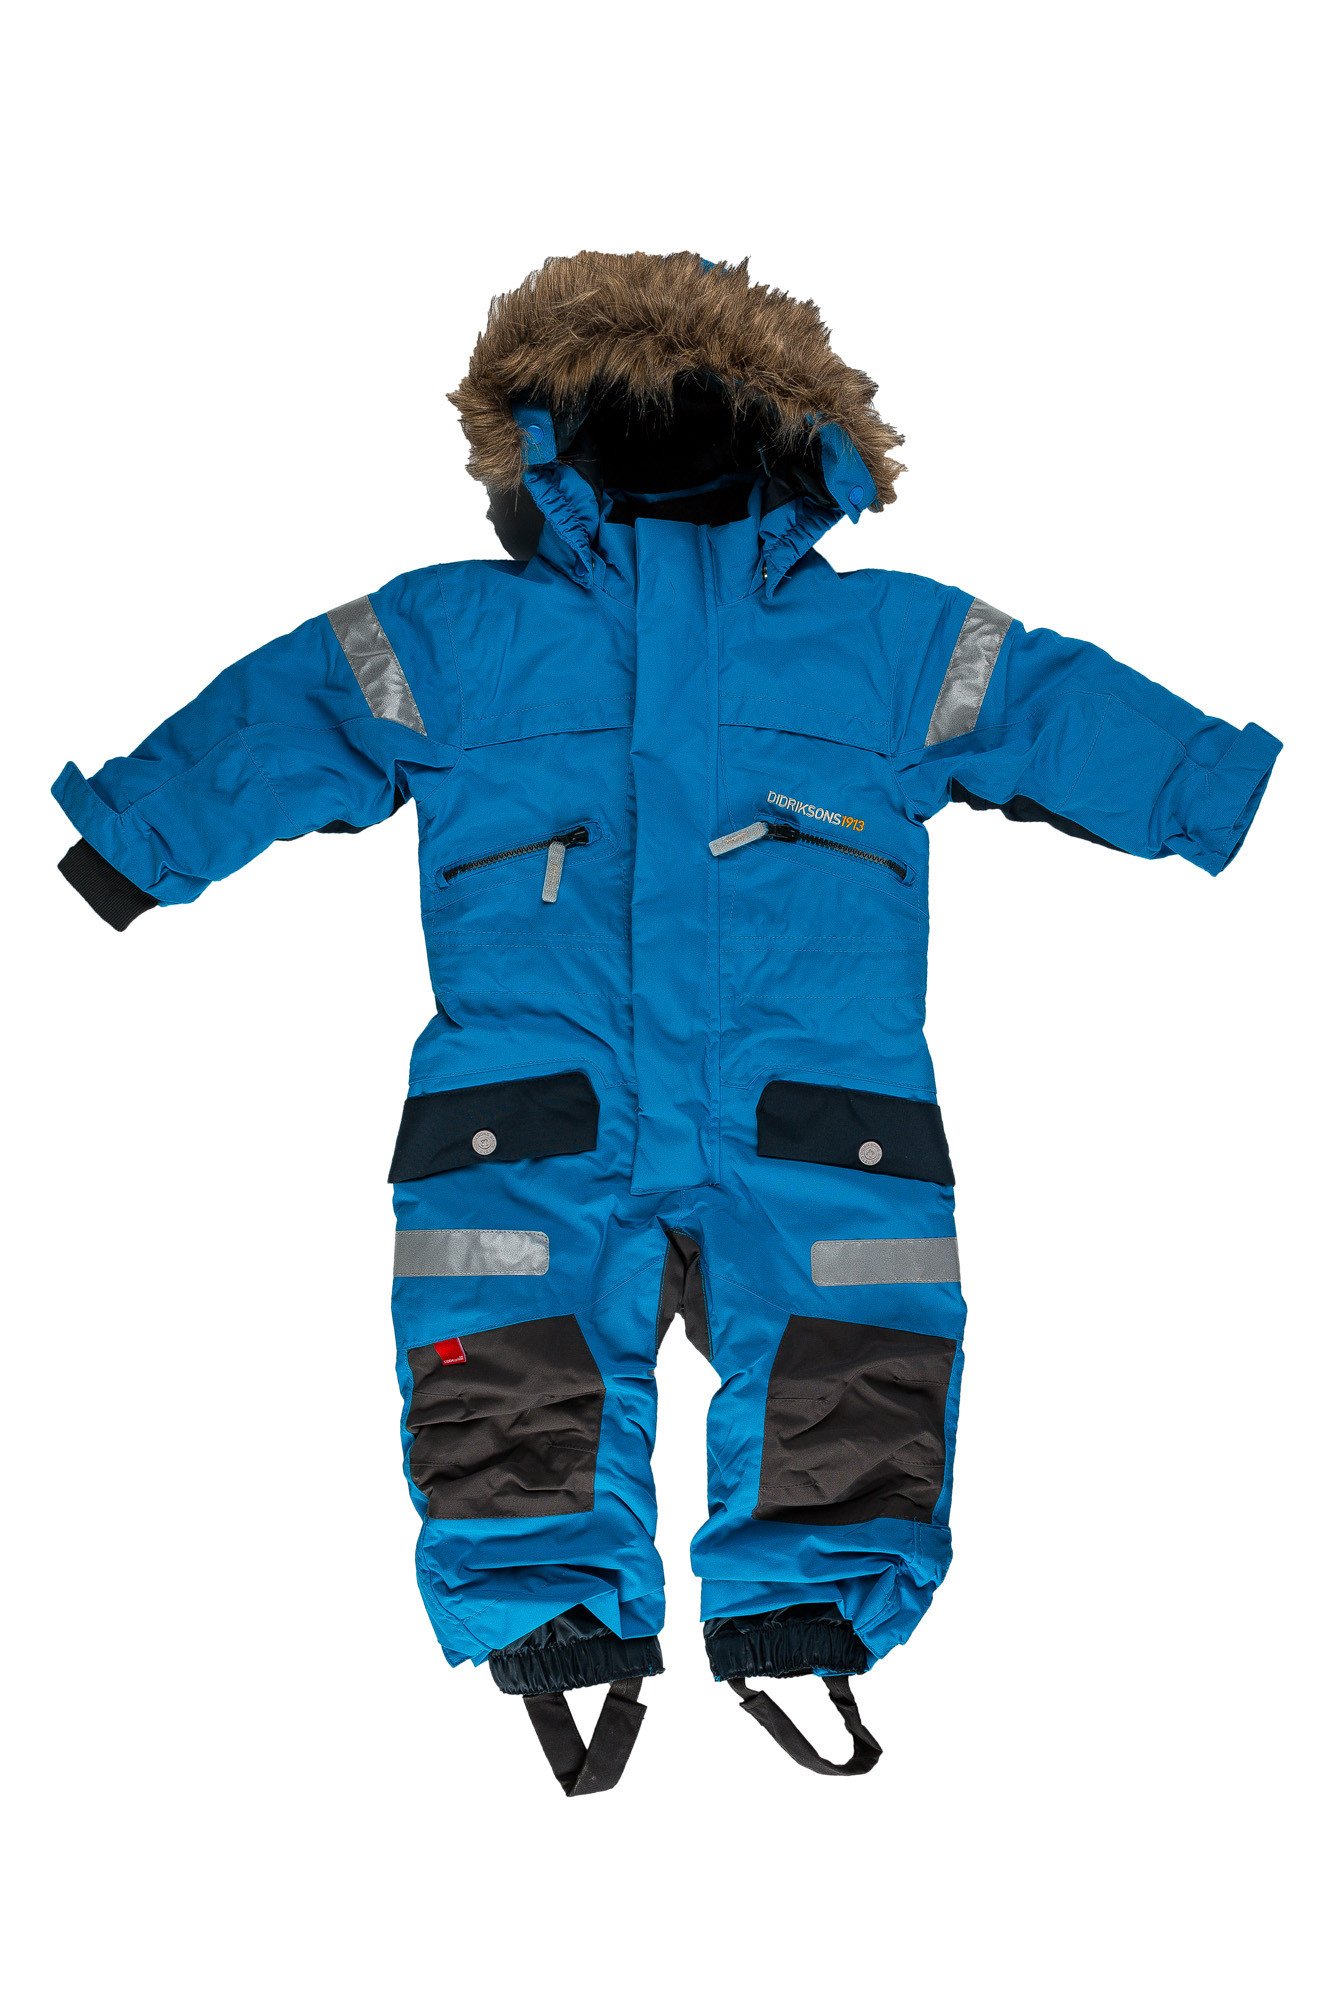 Overall Winter Snow Suit // Kids | Winter Wear Finland